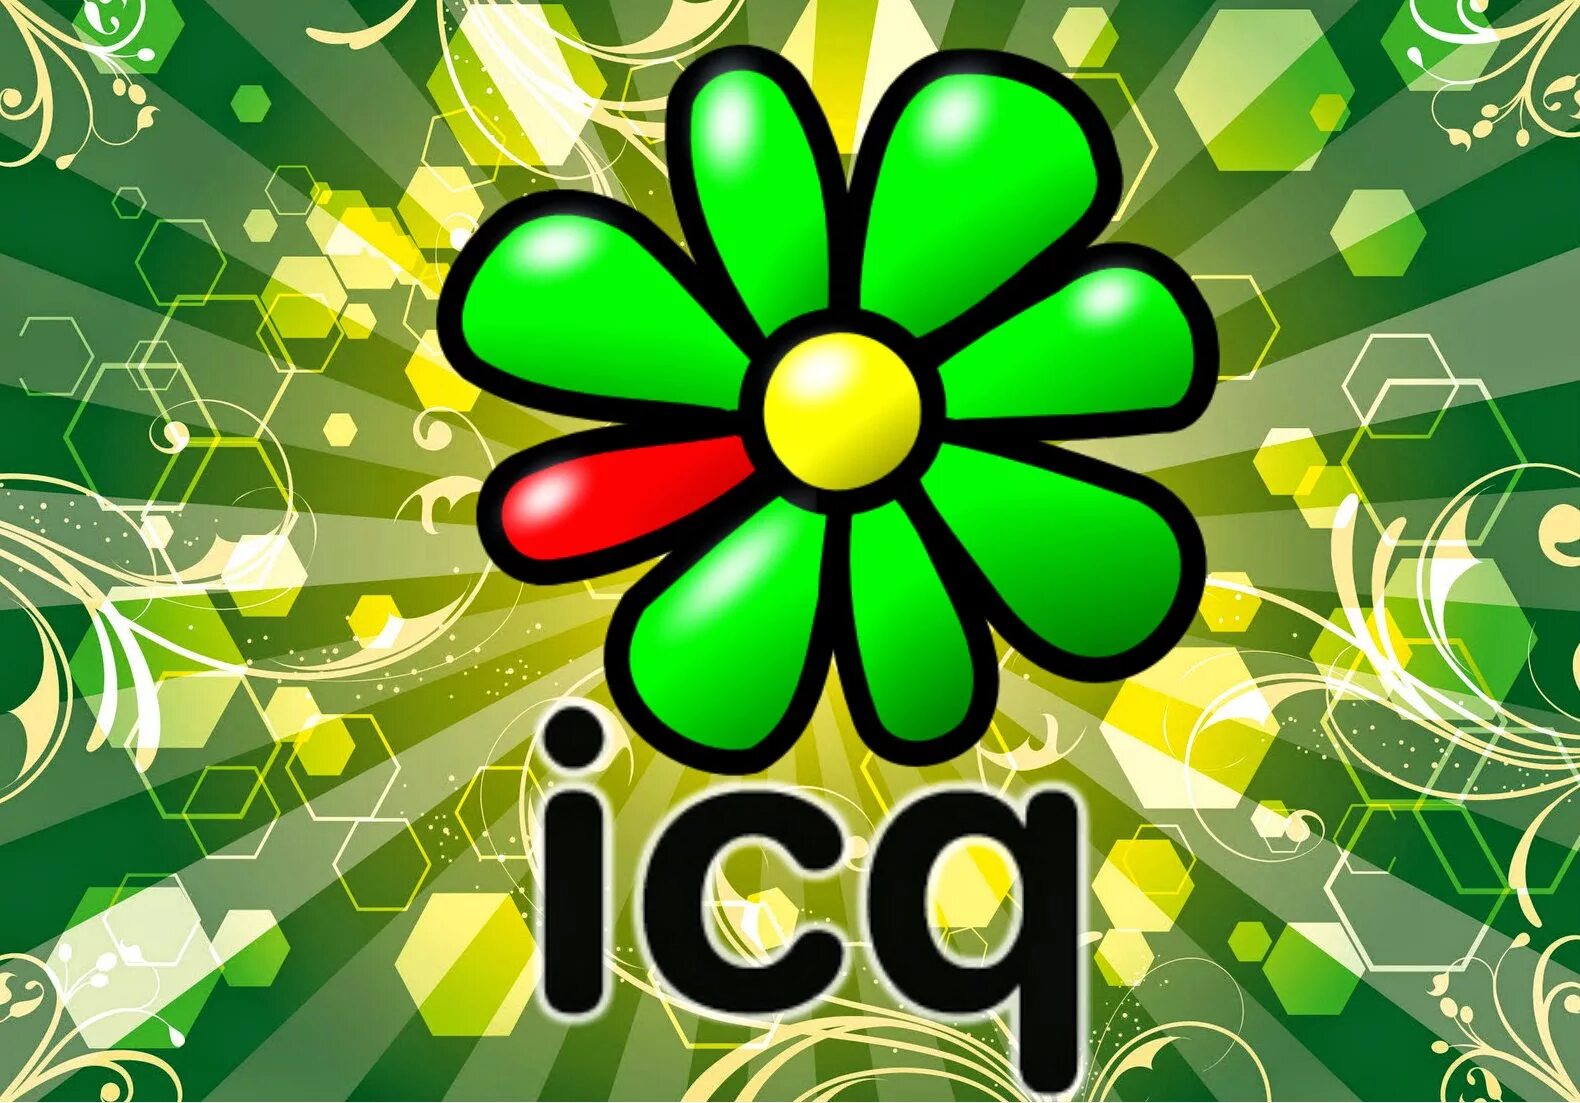 ICQ. ICQ логотип. ICQ фото. Картинки для аськи.